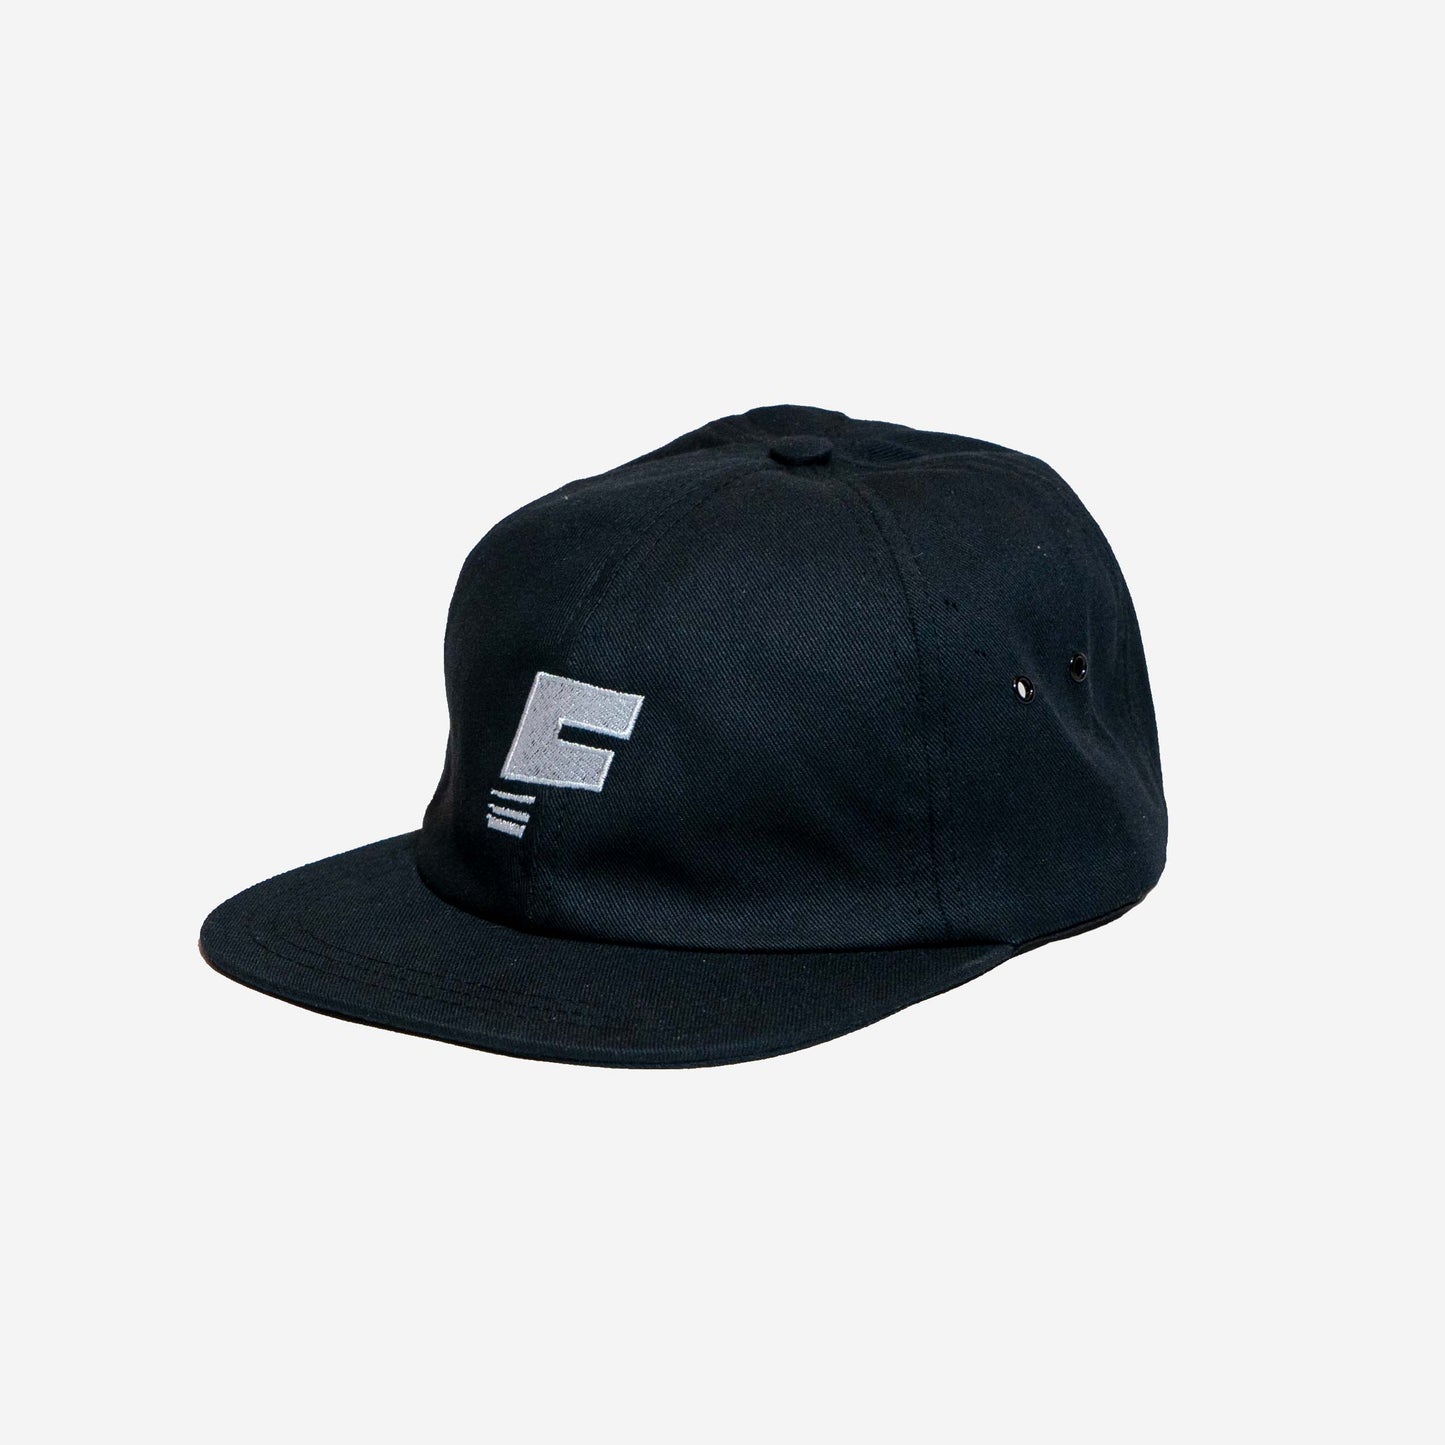 "F" 6 PANEL HAT - BLACK